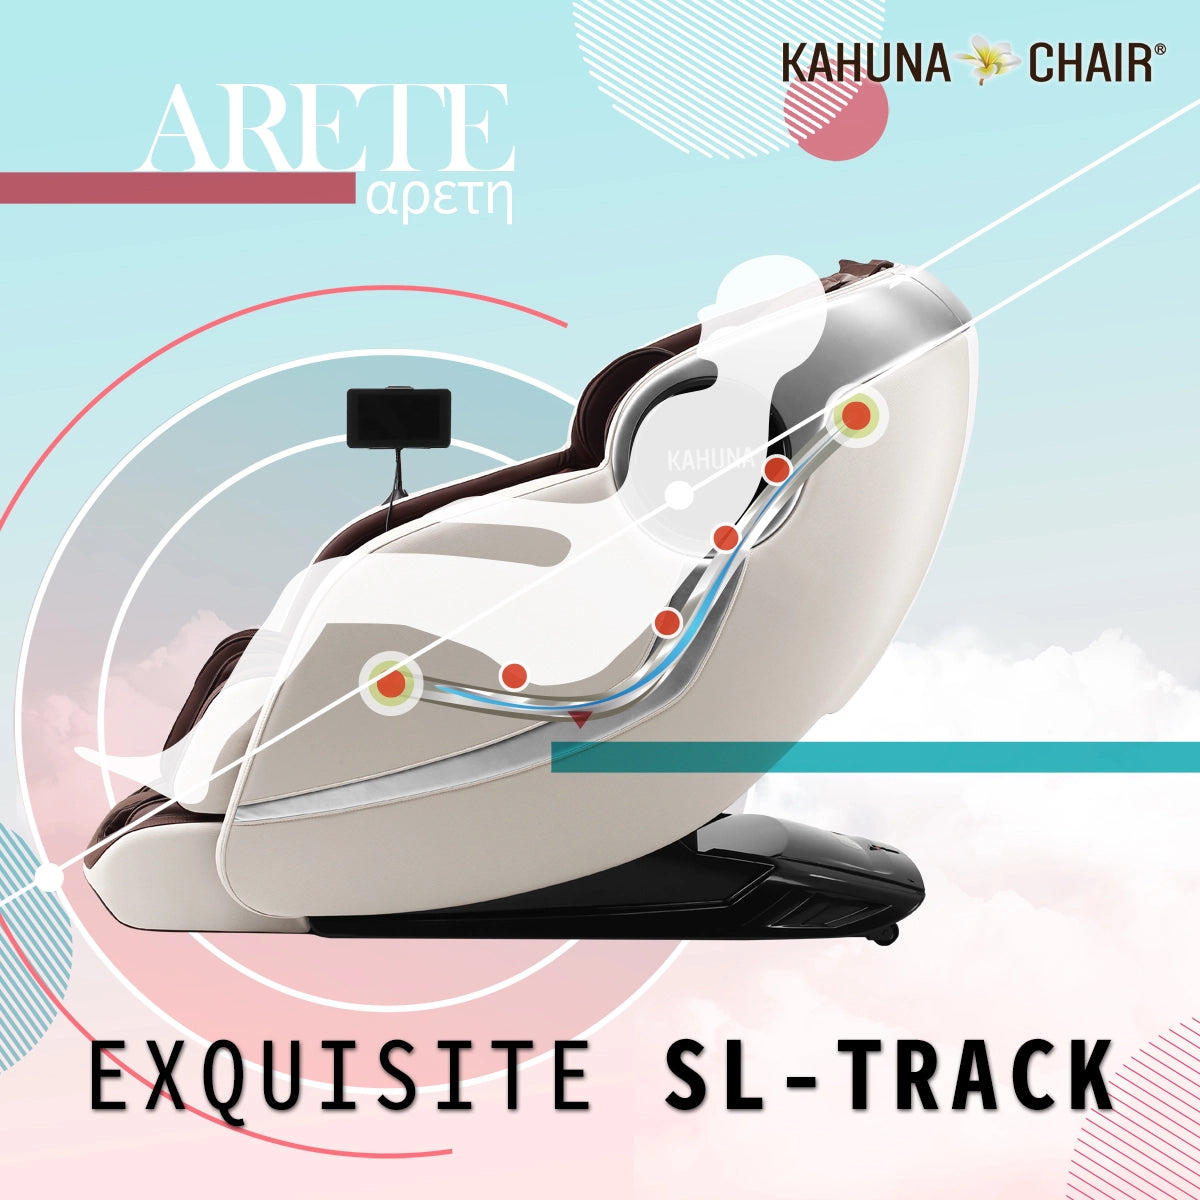 Kahuna Elite 3D Massage Chair Arete